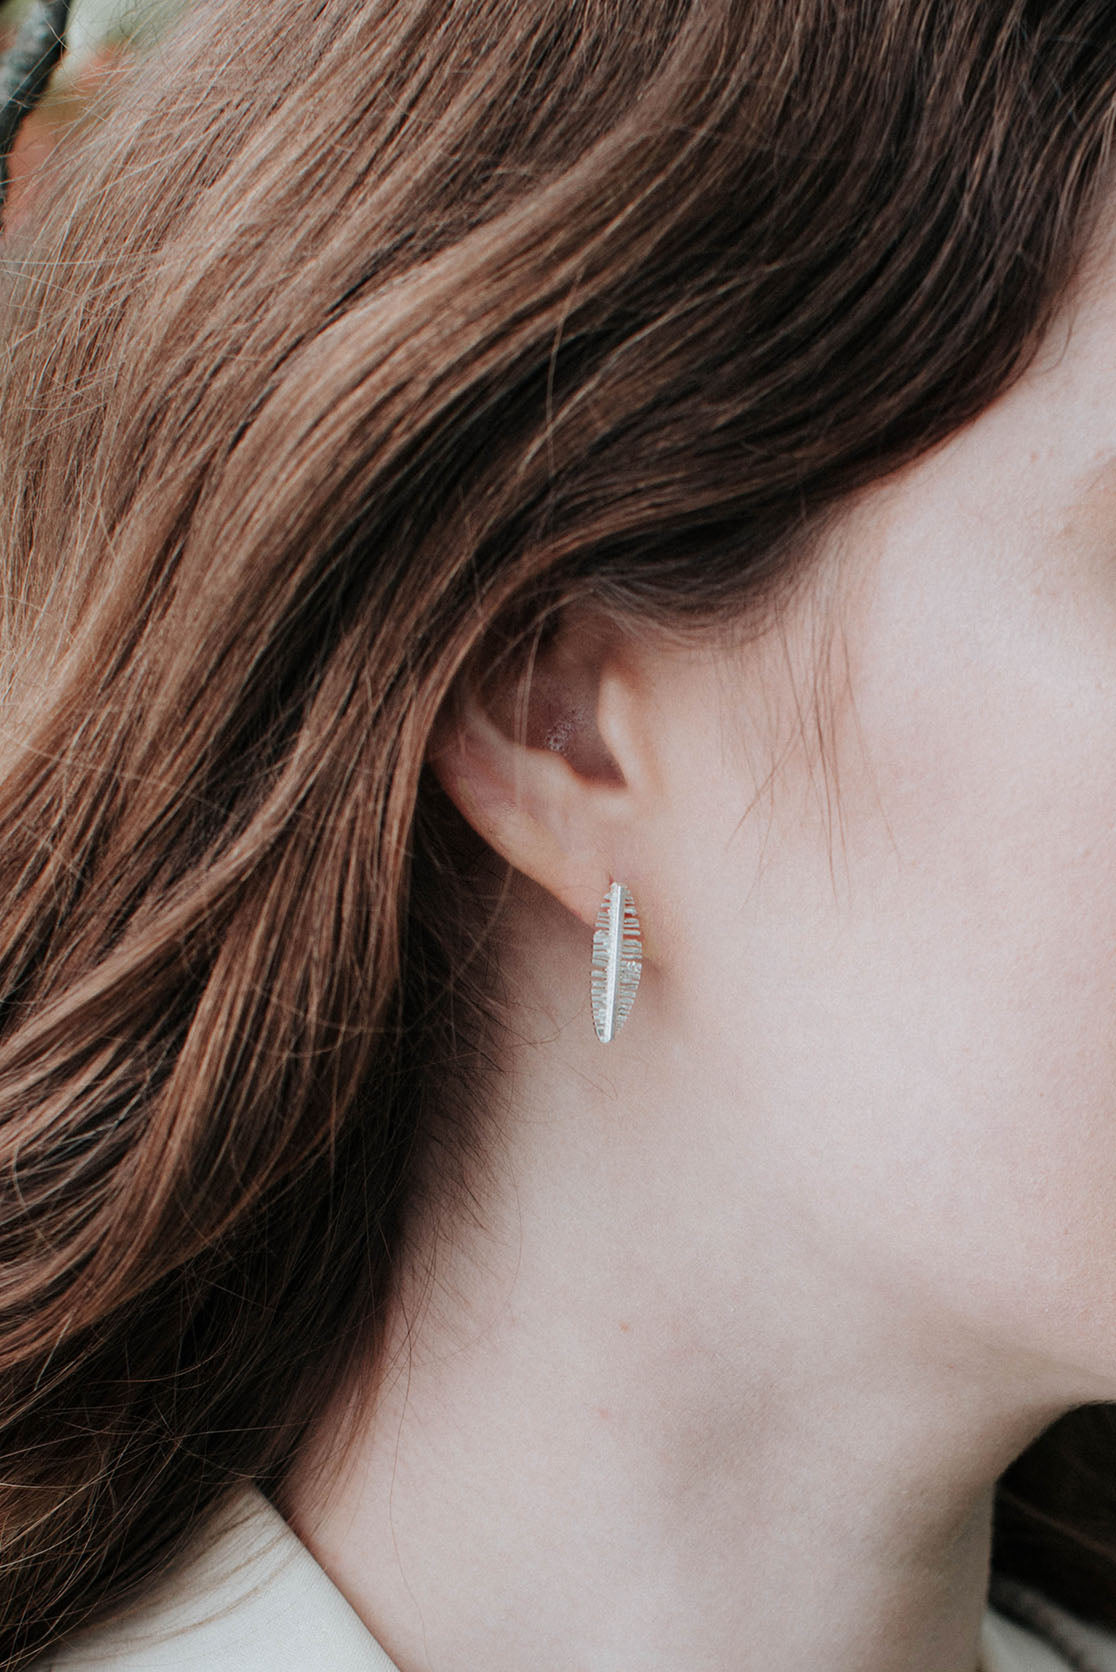 Juno Long Single Earring Silver – Spike earring from Syster P